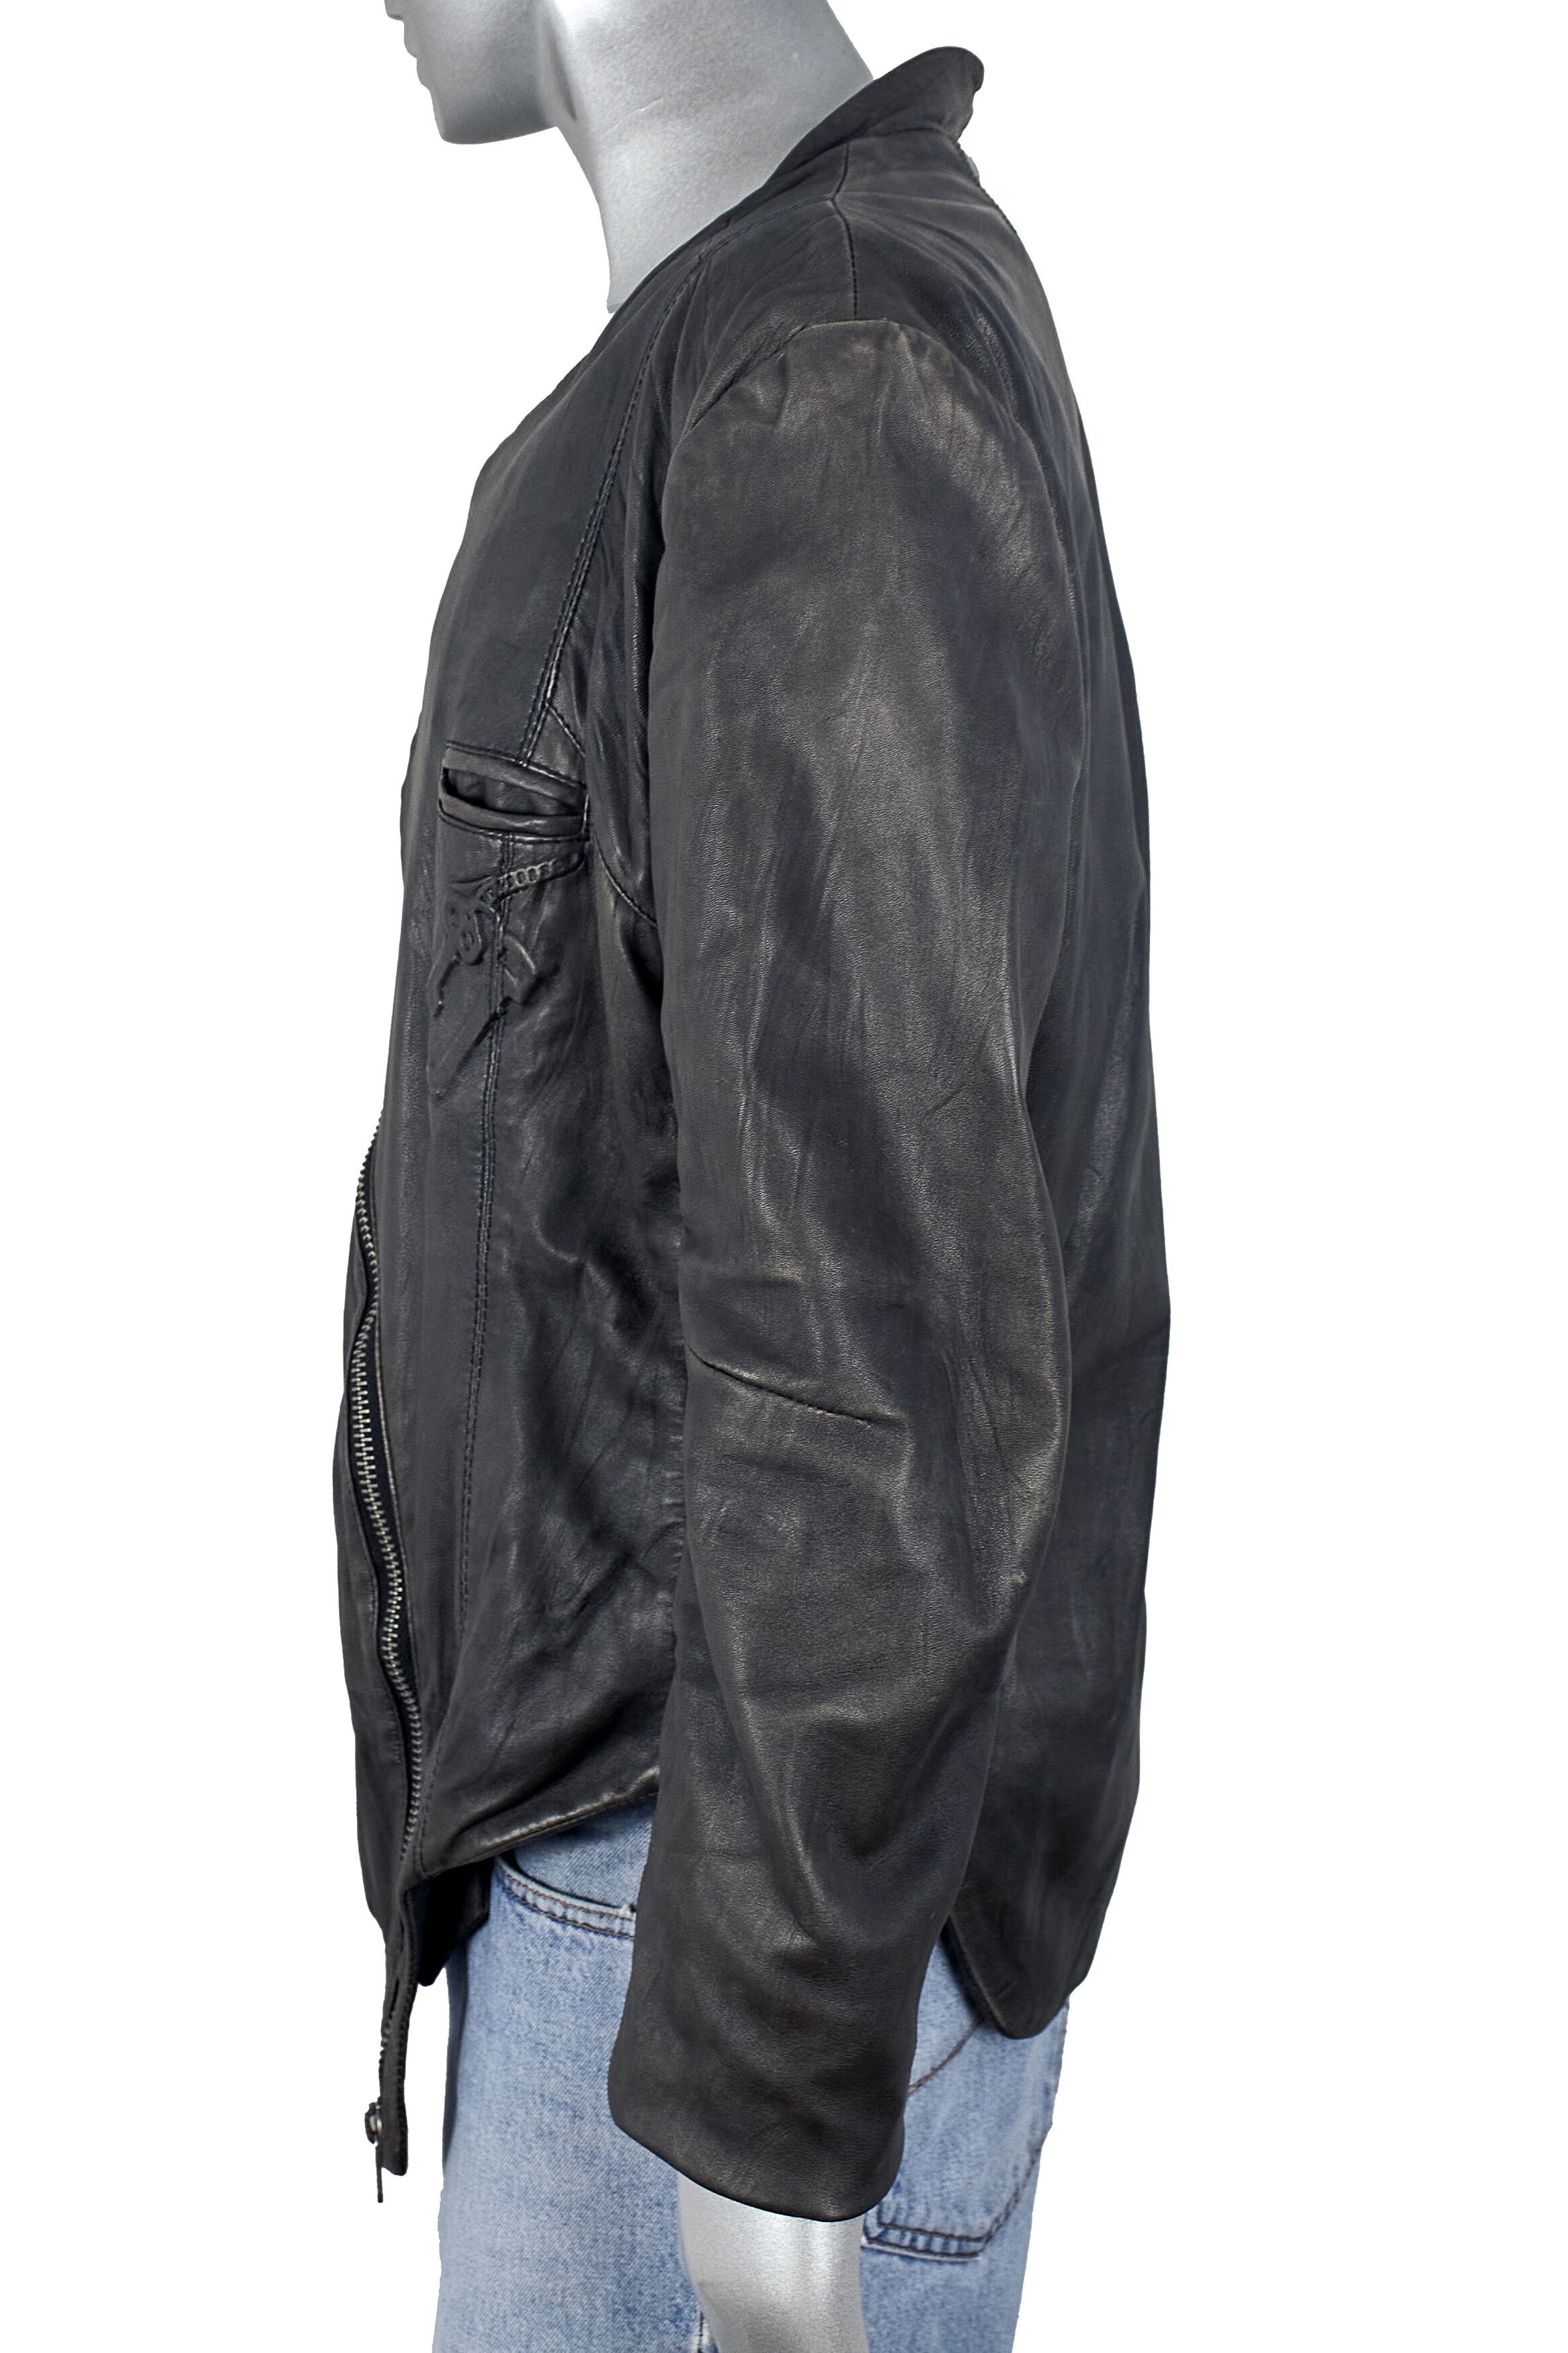 Delusion Delusion futuristic designer men's leather biker jacket Size US XL / EU 56 / 4 - 6 Thumbnail